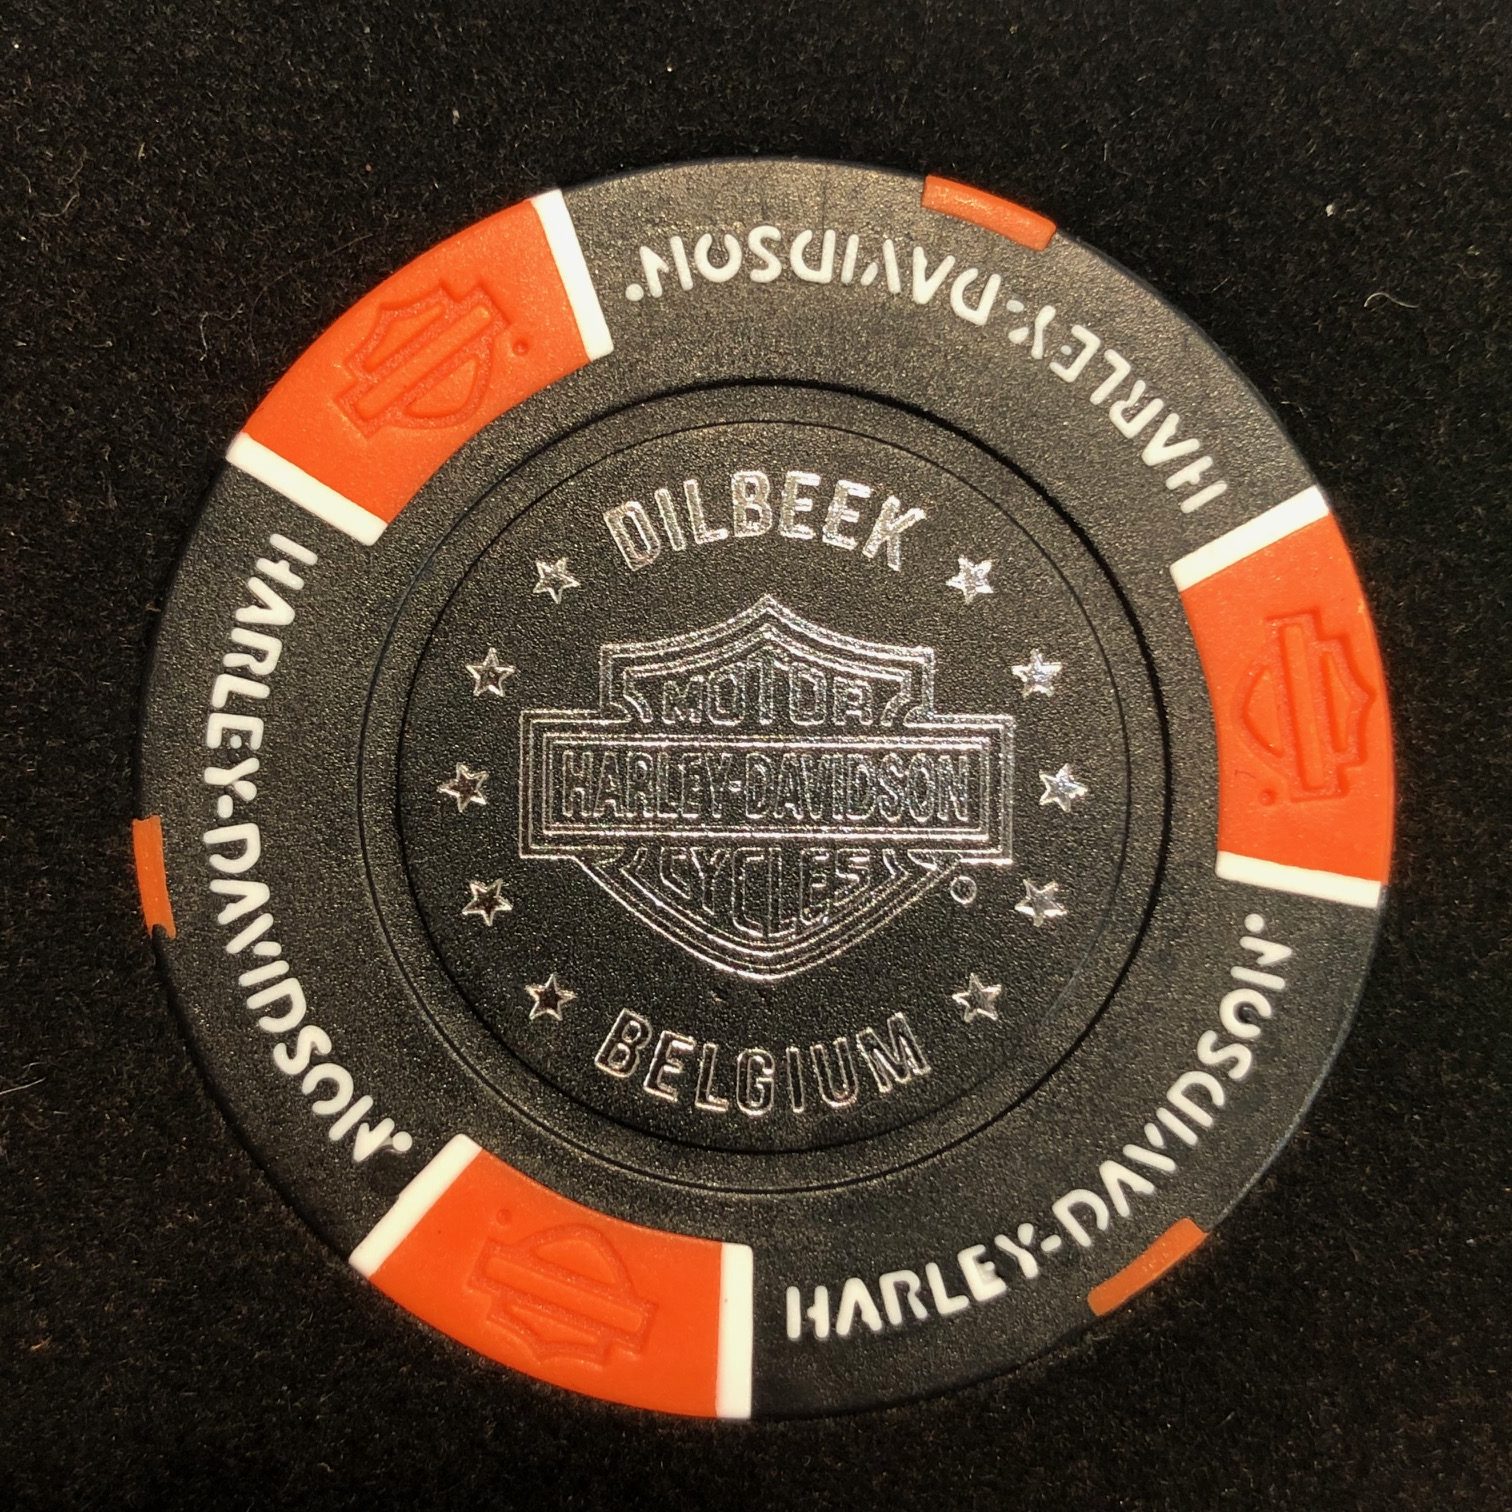 Orange/White AKQJ Details about   HD CAPITAL BRUSSELS ~ Harley International Poker Chip 